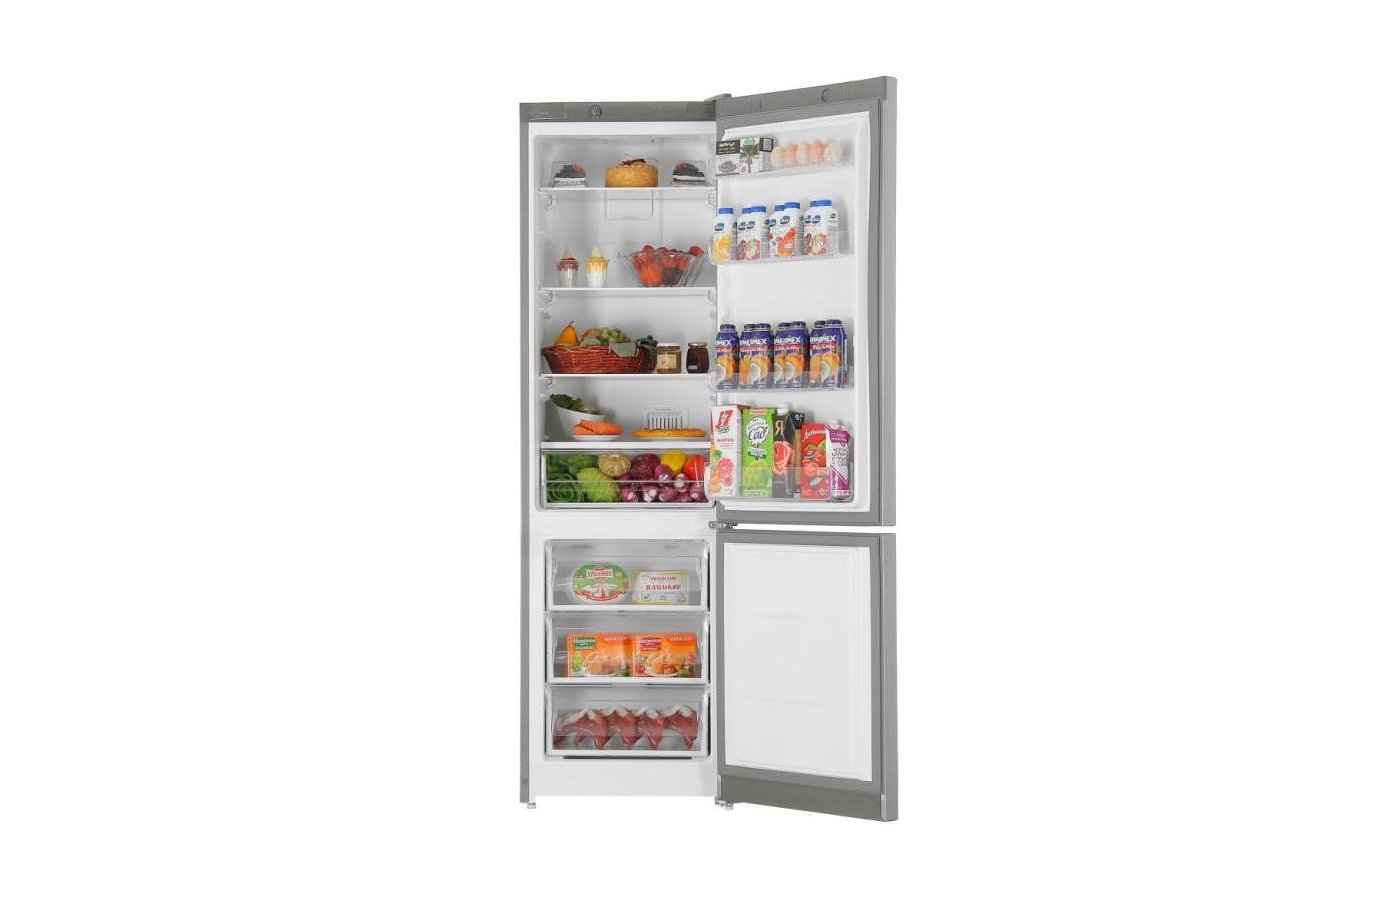 Ariston 4200 холодильник